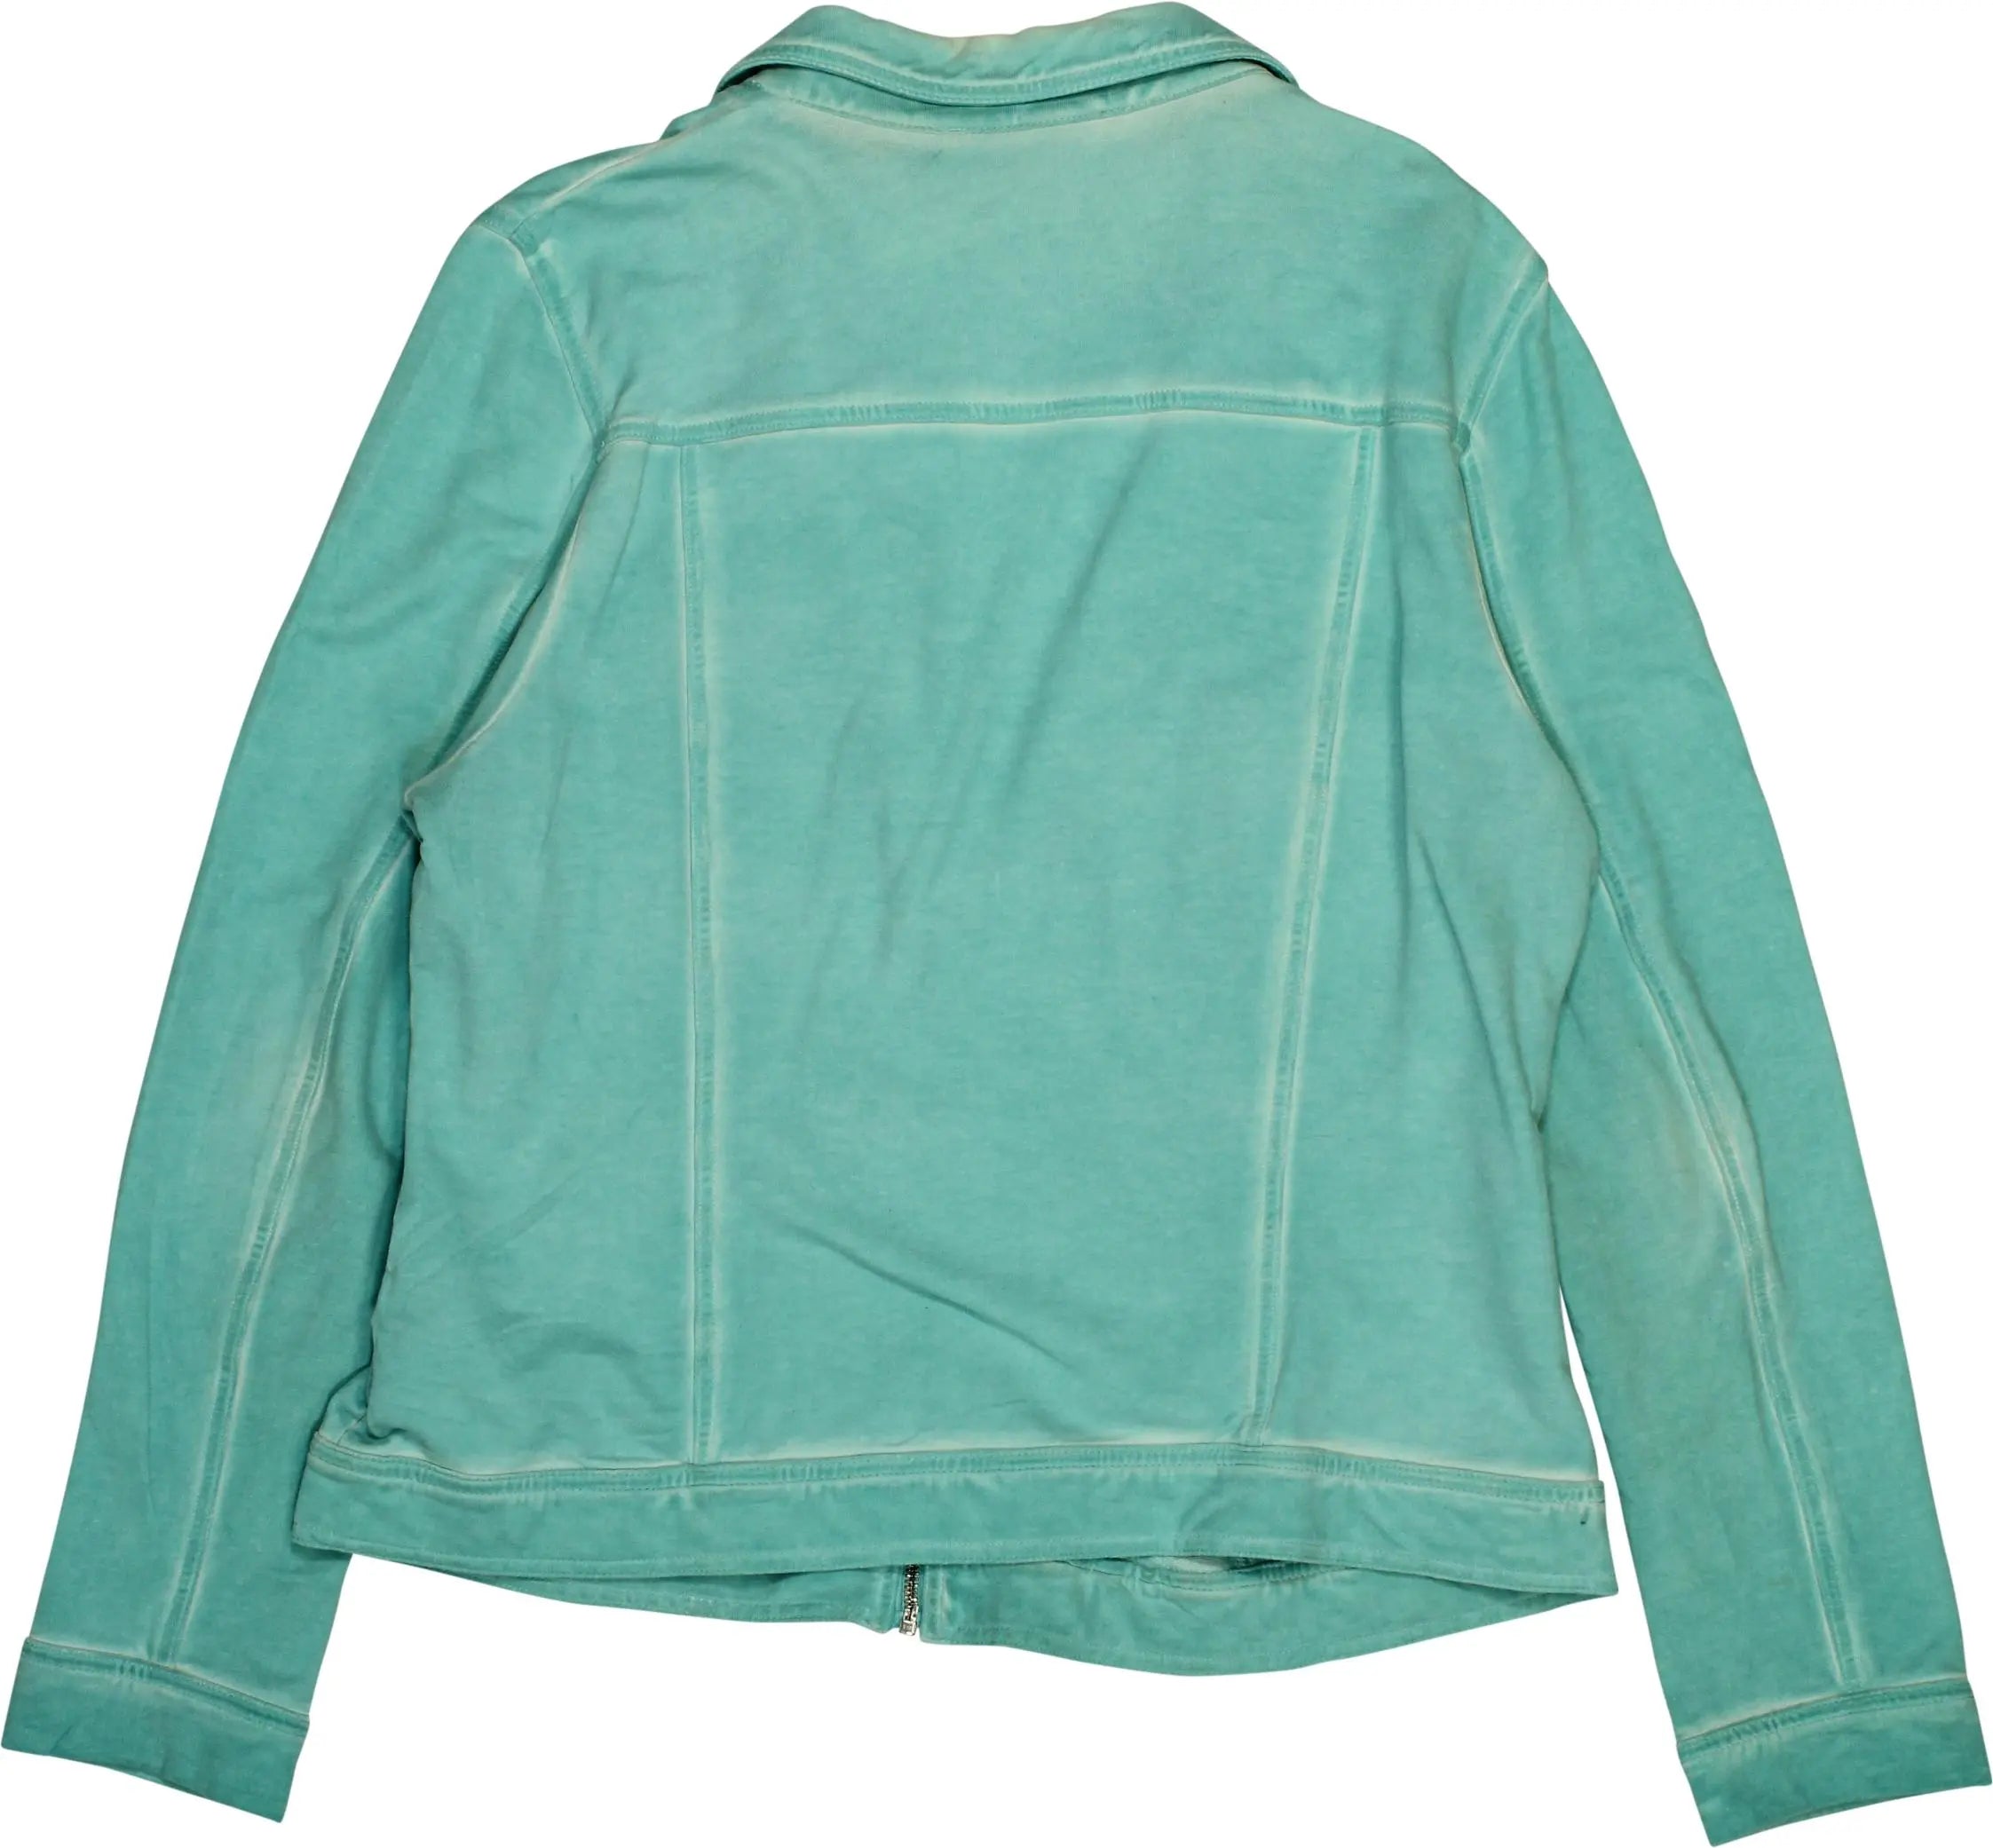 Fitt Originals - Blue Jacket- ThriftTale.com - Vintage and second handclothing